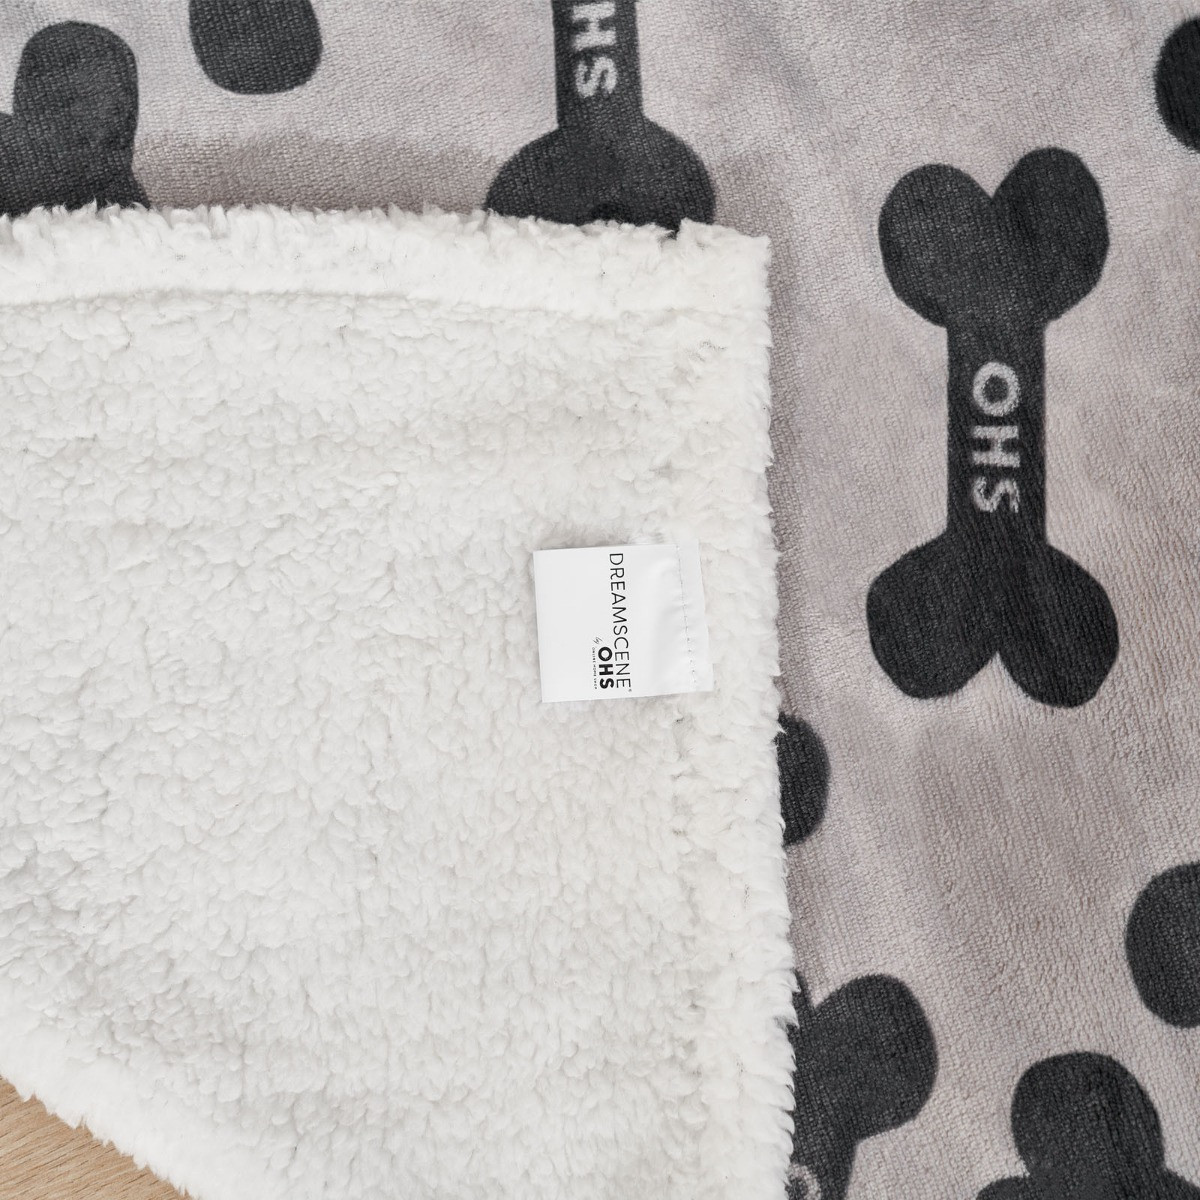 OHS Bone Print Sherpa Pet Blanket, Charcoal - 75 x 110cm>